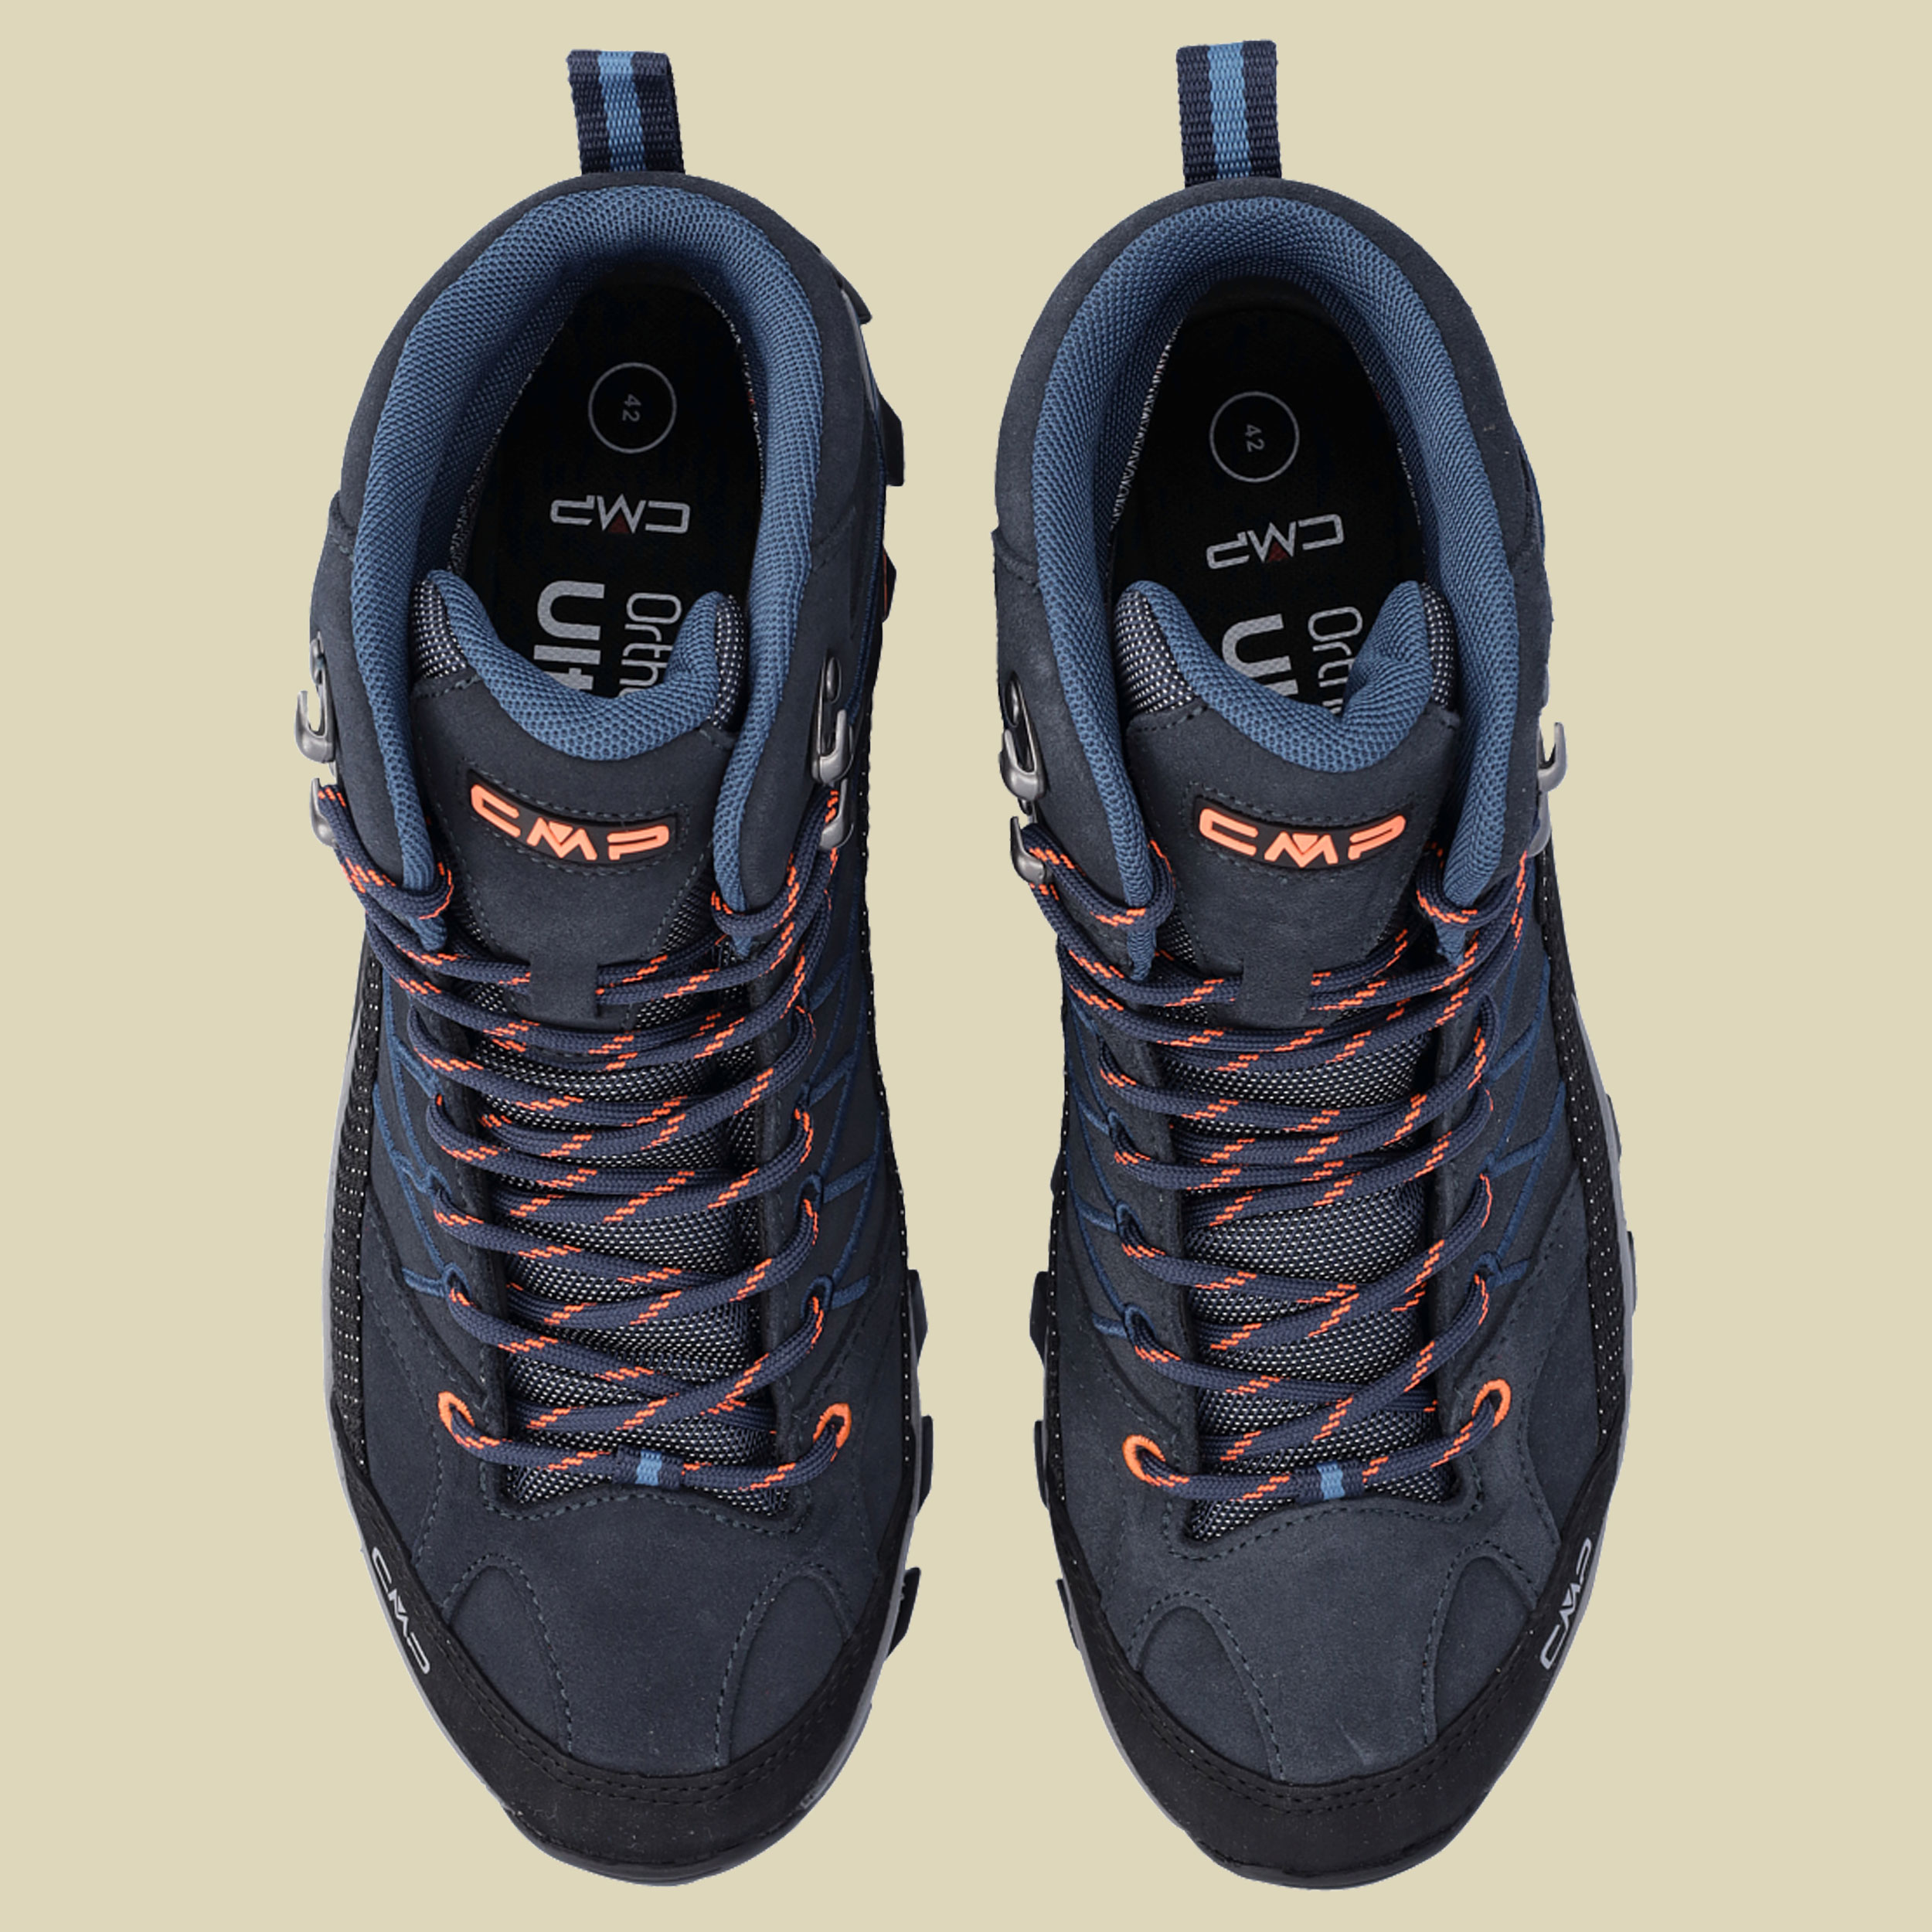 Rigel Mid Trekking Shoes WP Men Größe 42 Farbe 27NM b.blue-flash orange